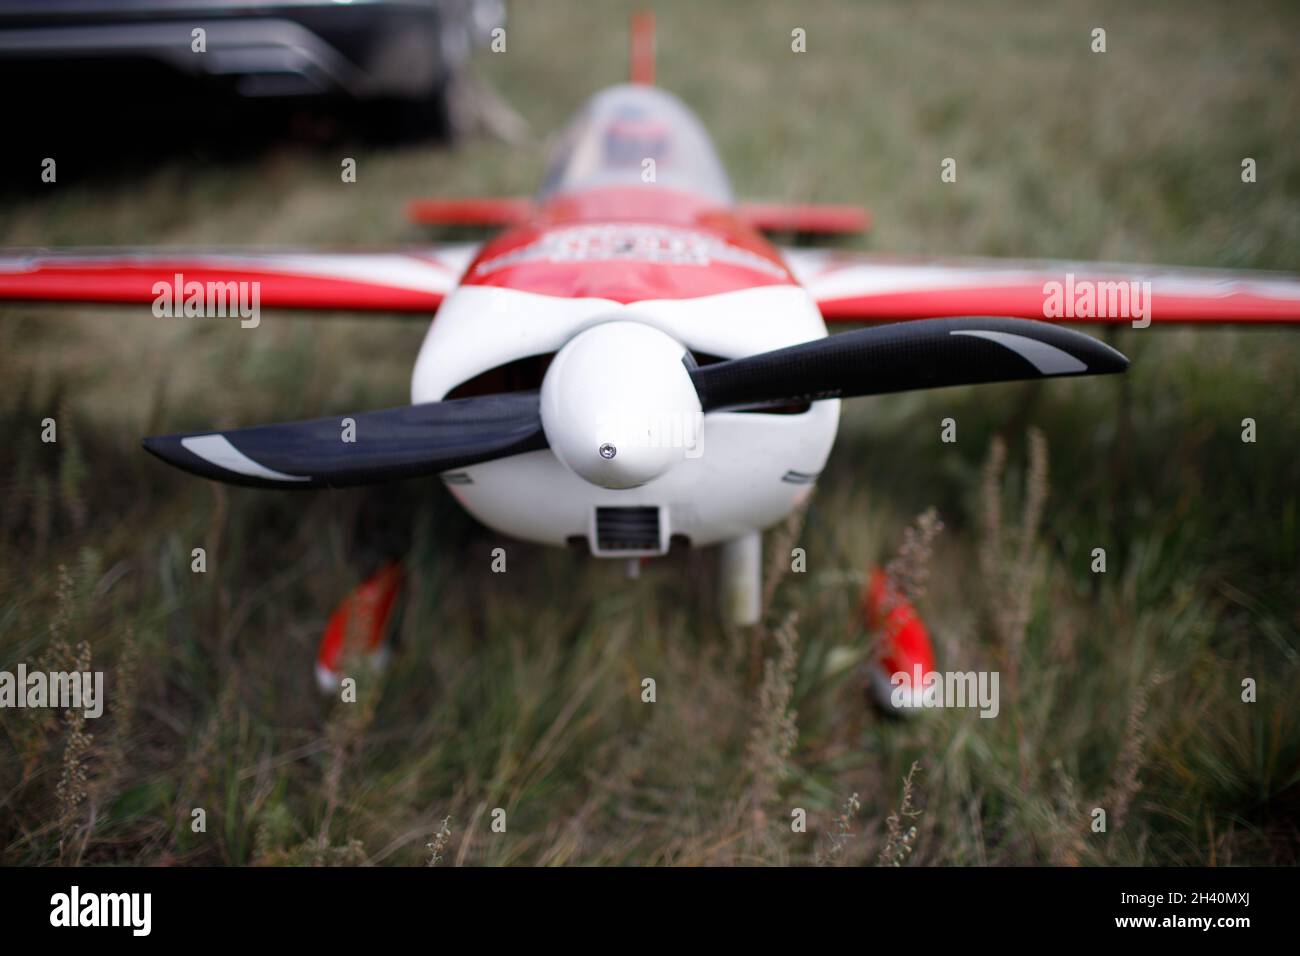 Radio control rc airplane toy model on ground Stock Photo